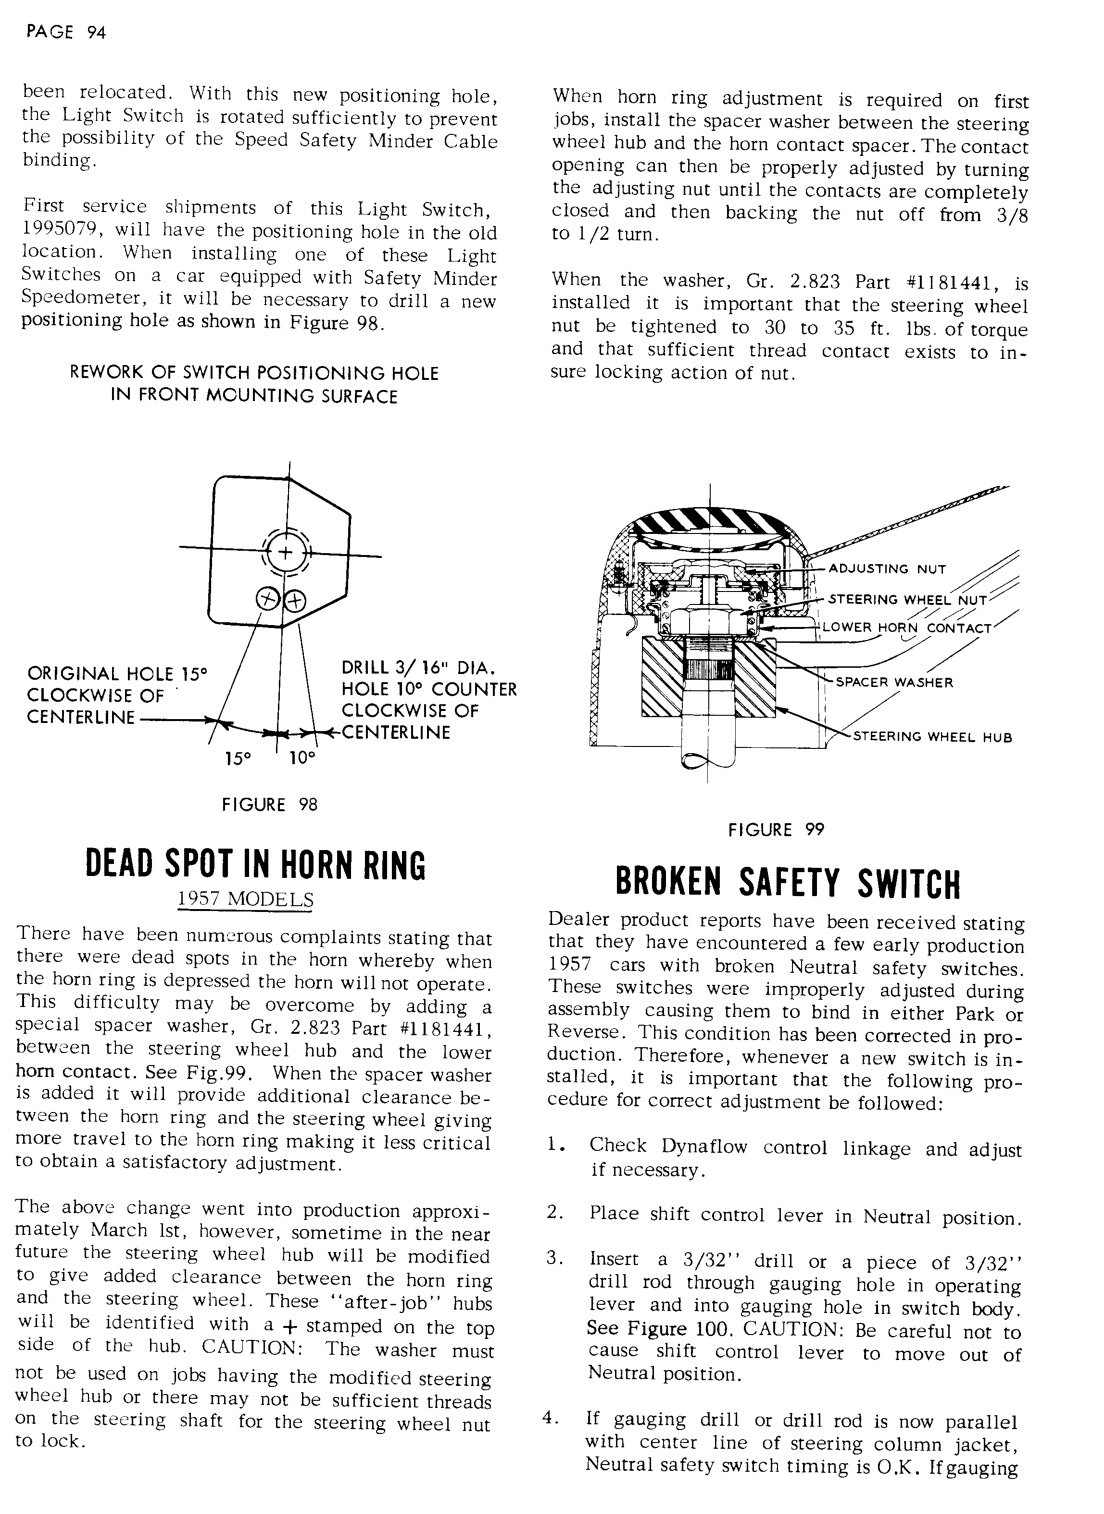 n_1957 Buick Product Service  Bulletins-098-098.jpg